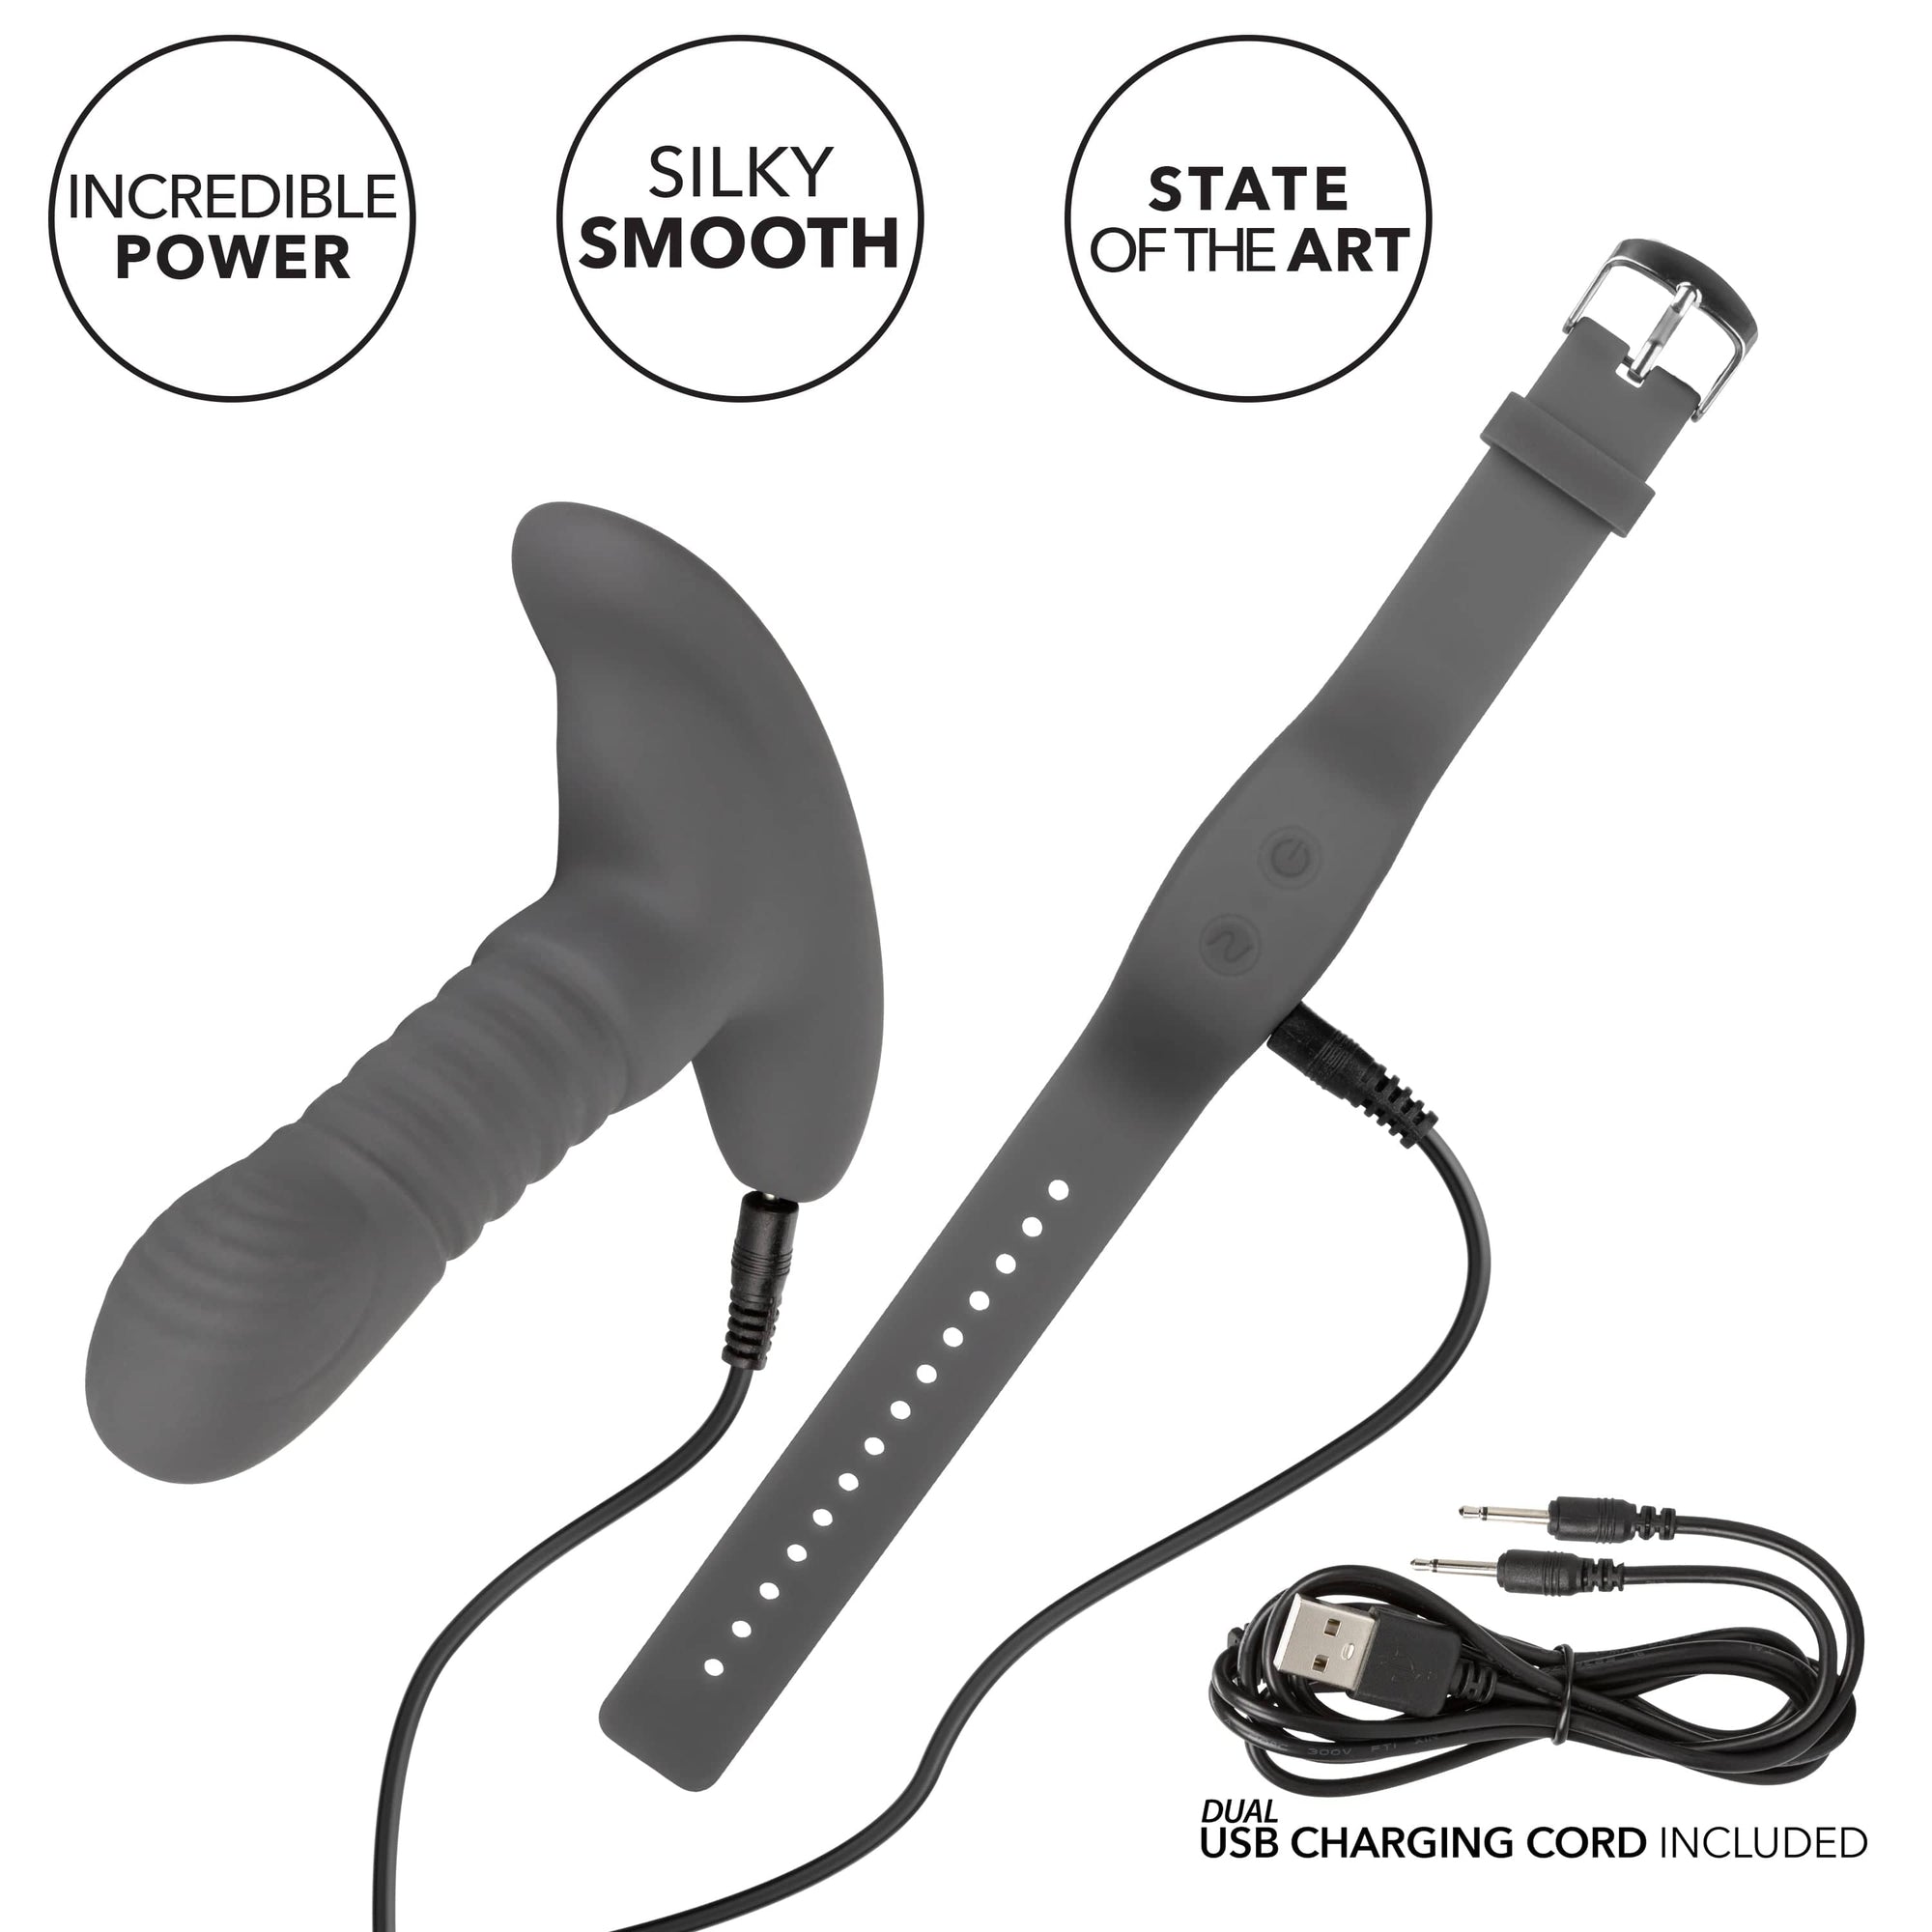 California Exotics - Eclipse Wristband Remote Thrusting Rotator Probe Anal Plug (Black) Remote Control Anal Plug (Vibration) Rechargeable 716770095787 CherryAffairs